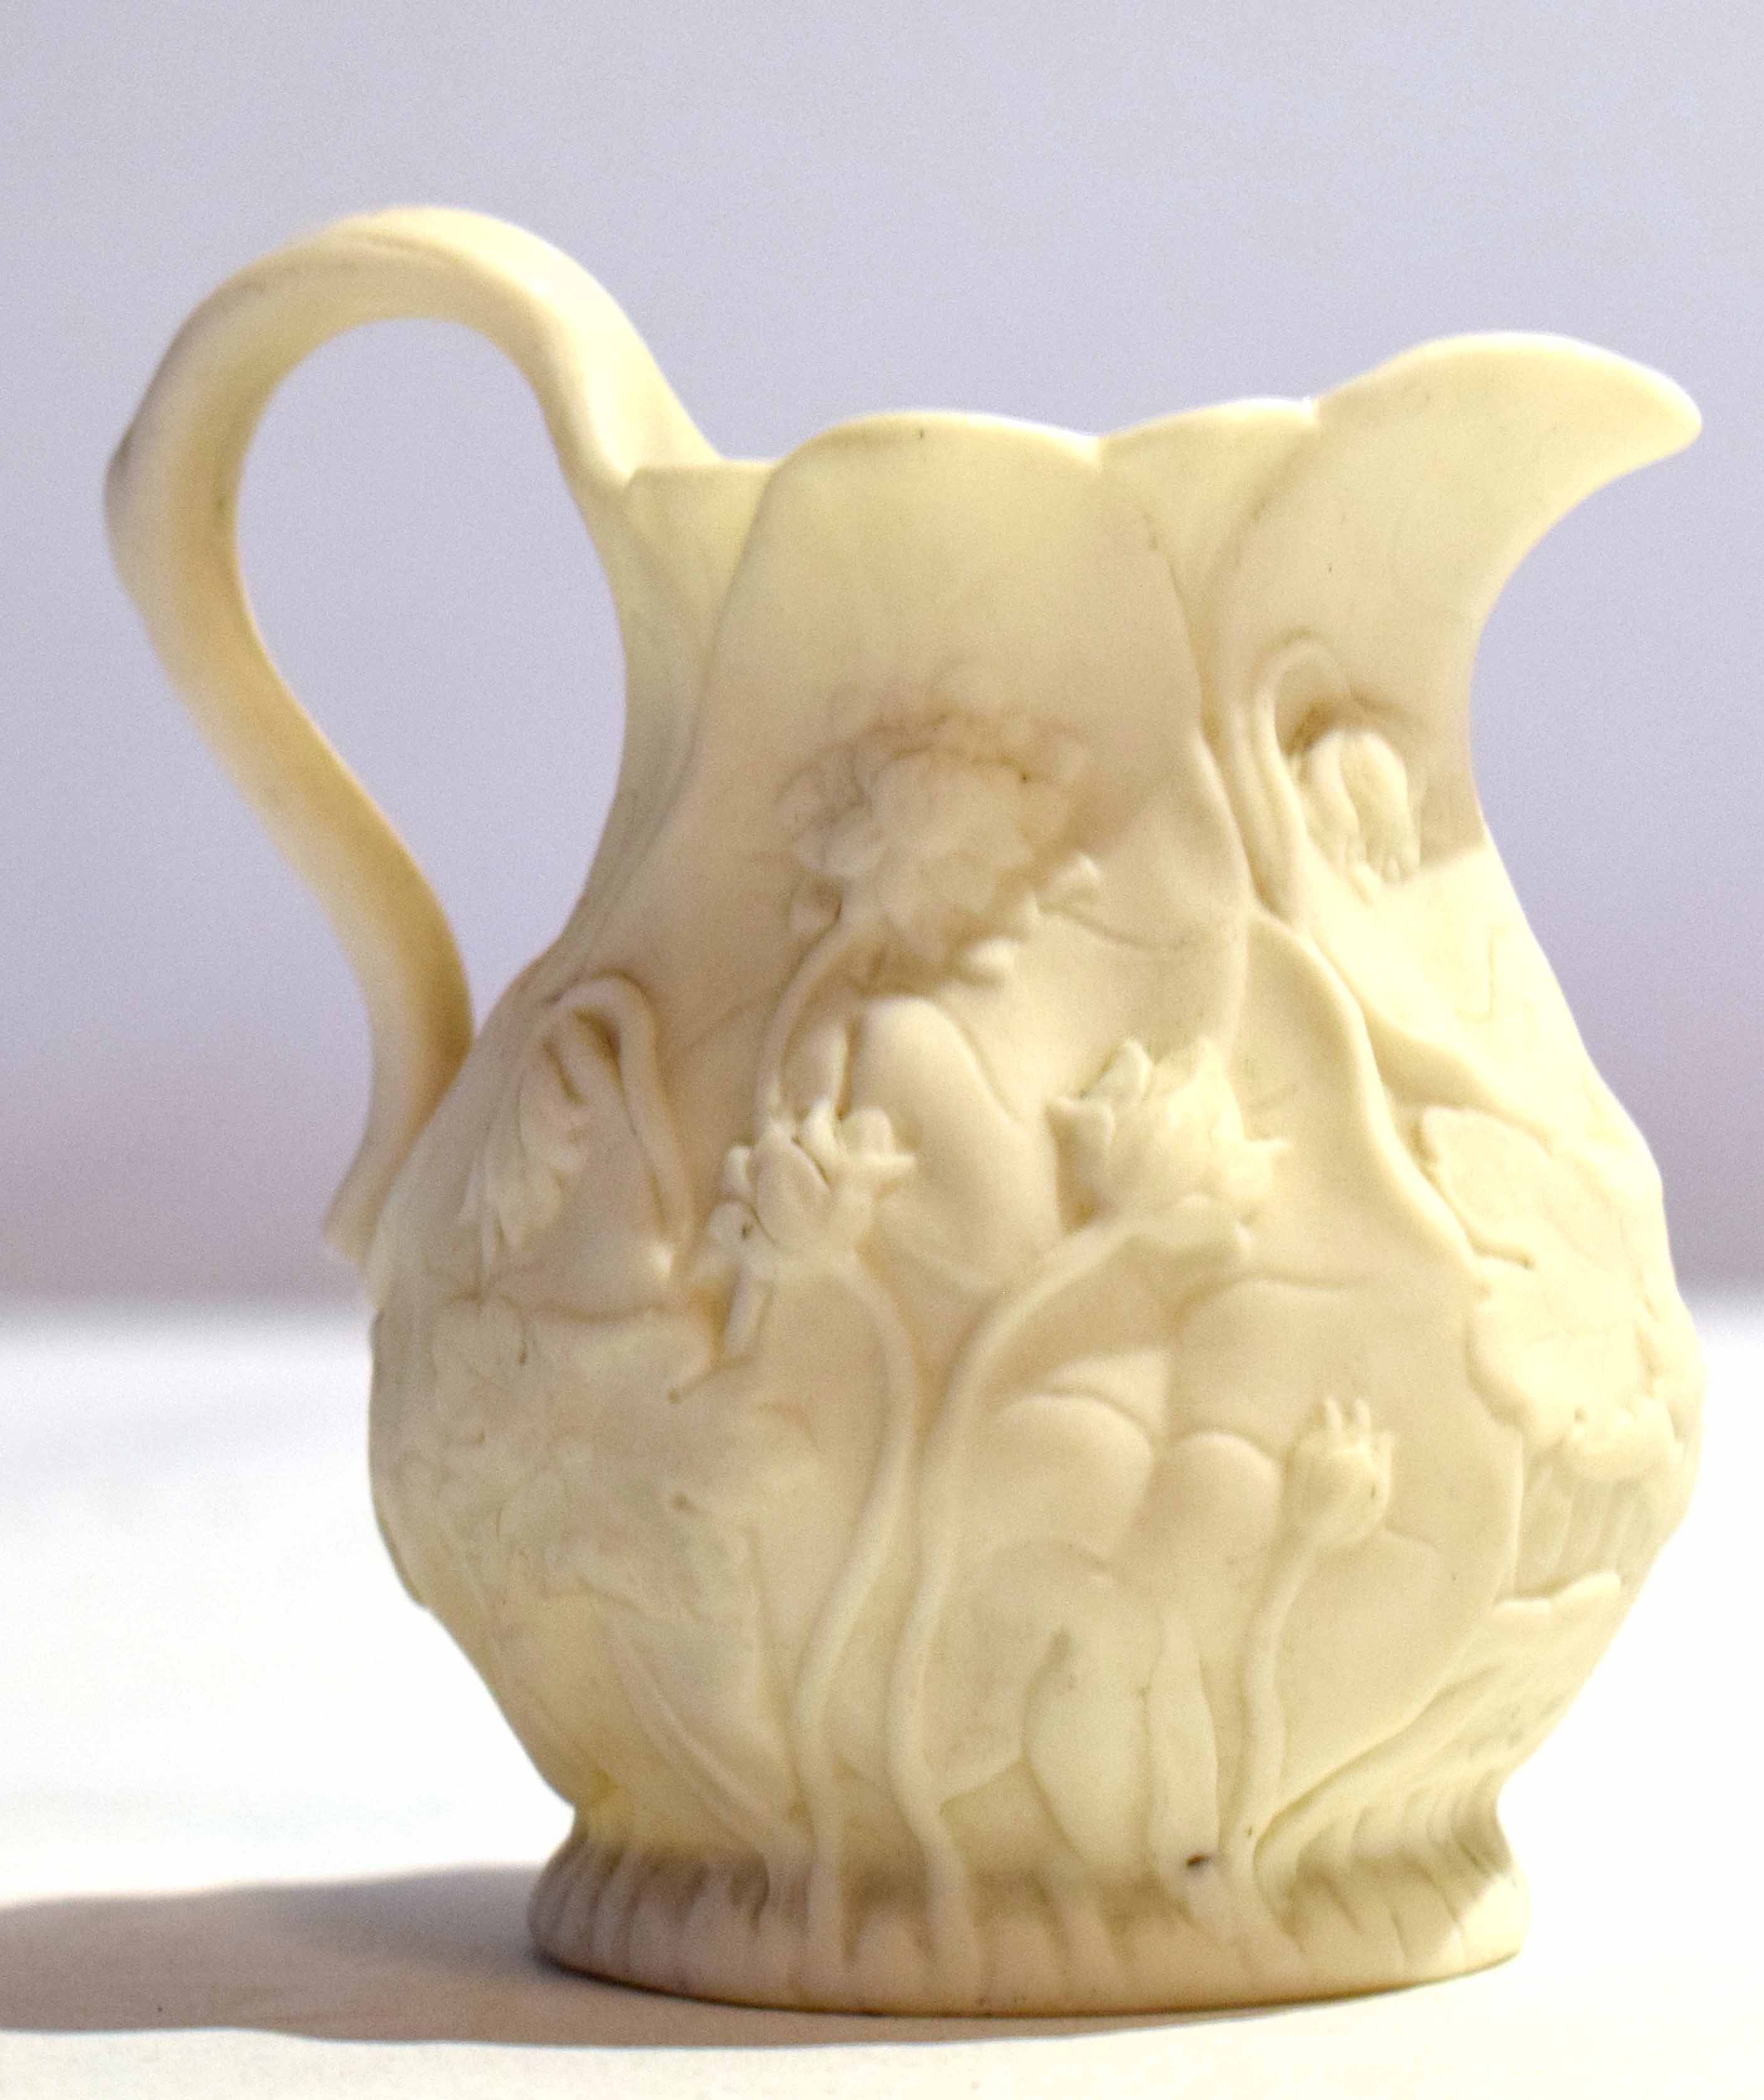 19th century Parian porcelain jug modelled with flowerheads, 7cm high